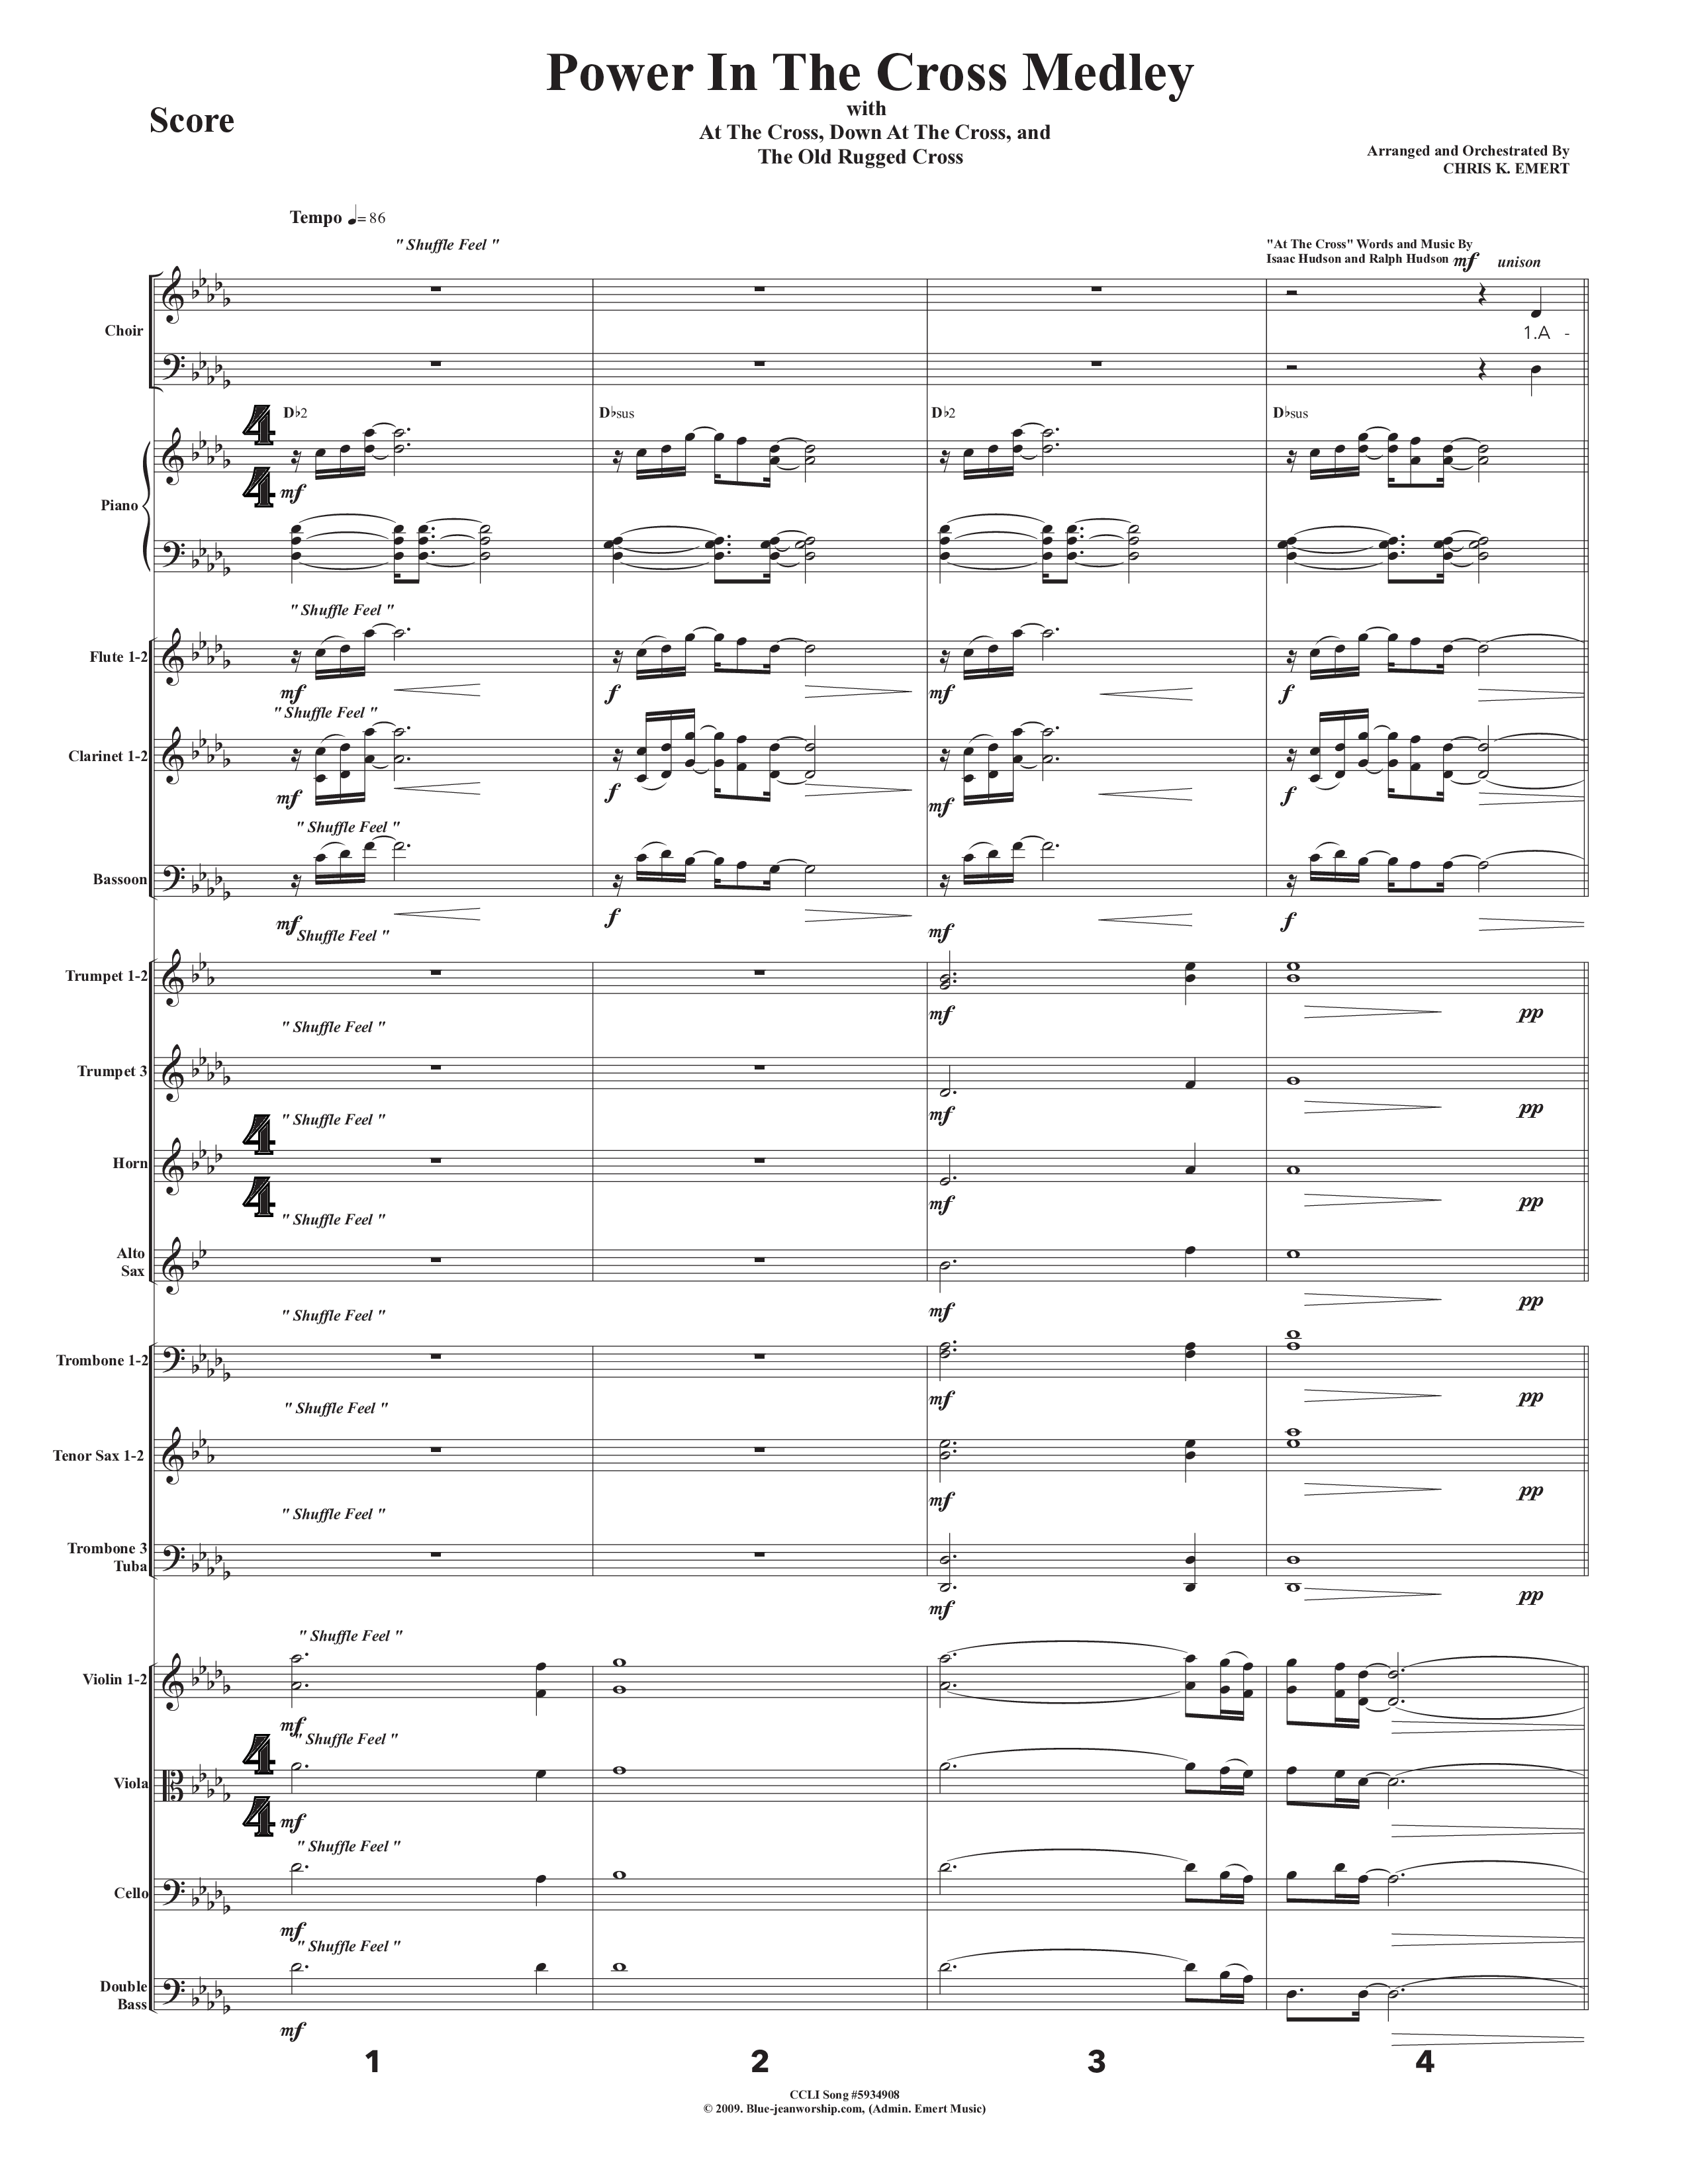 Power In The Cross Medley Conductor's Score (Chris Emert)